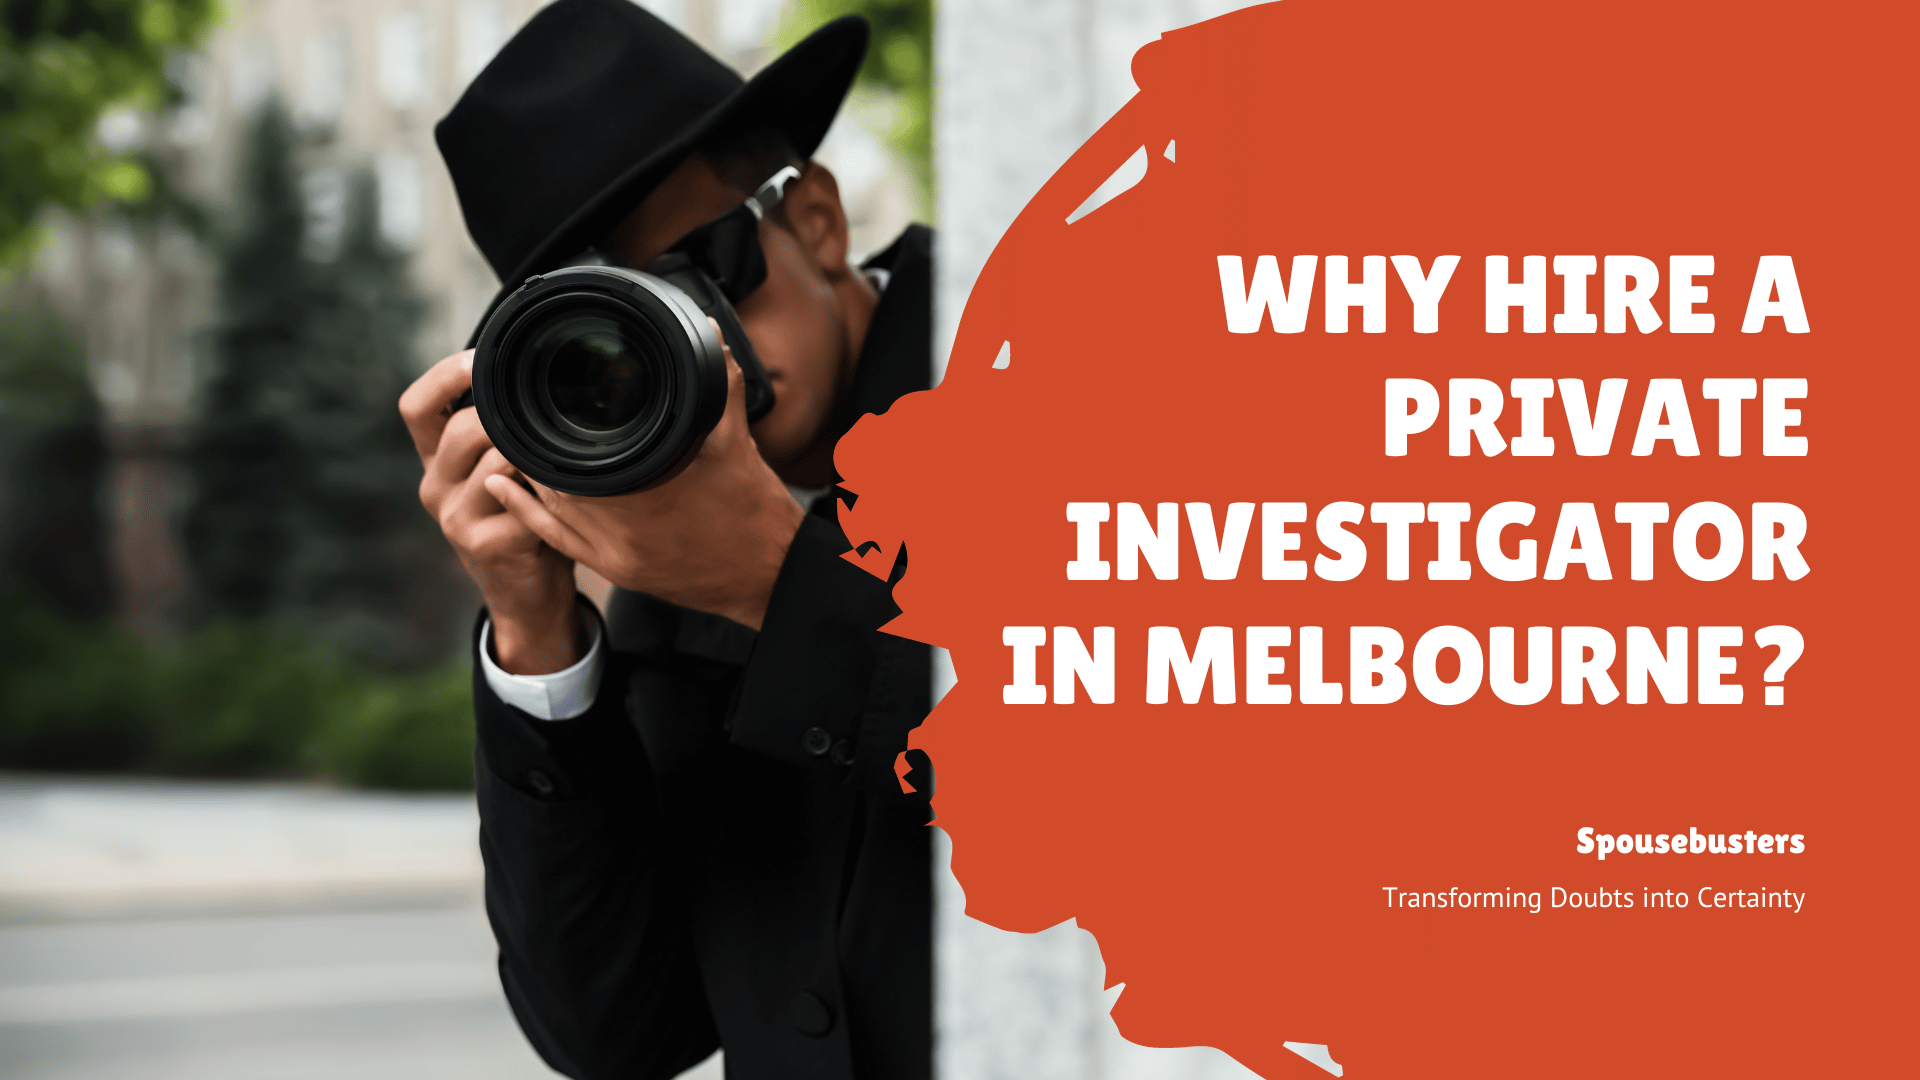 Private investigator discreetly surveilling in Melbourne's urban landscape.